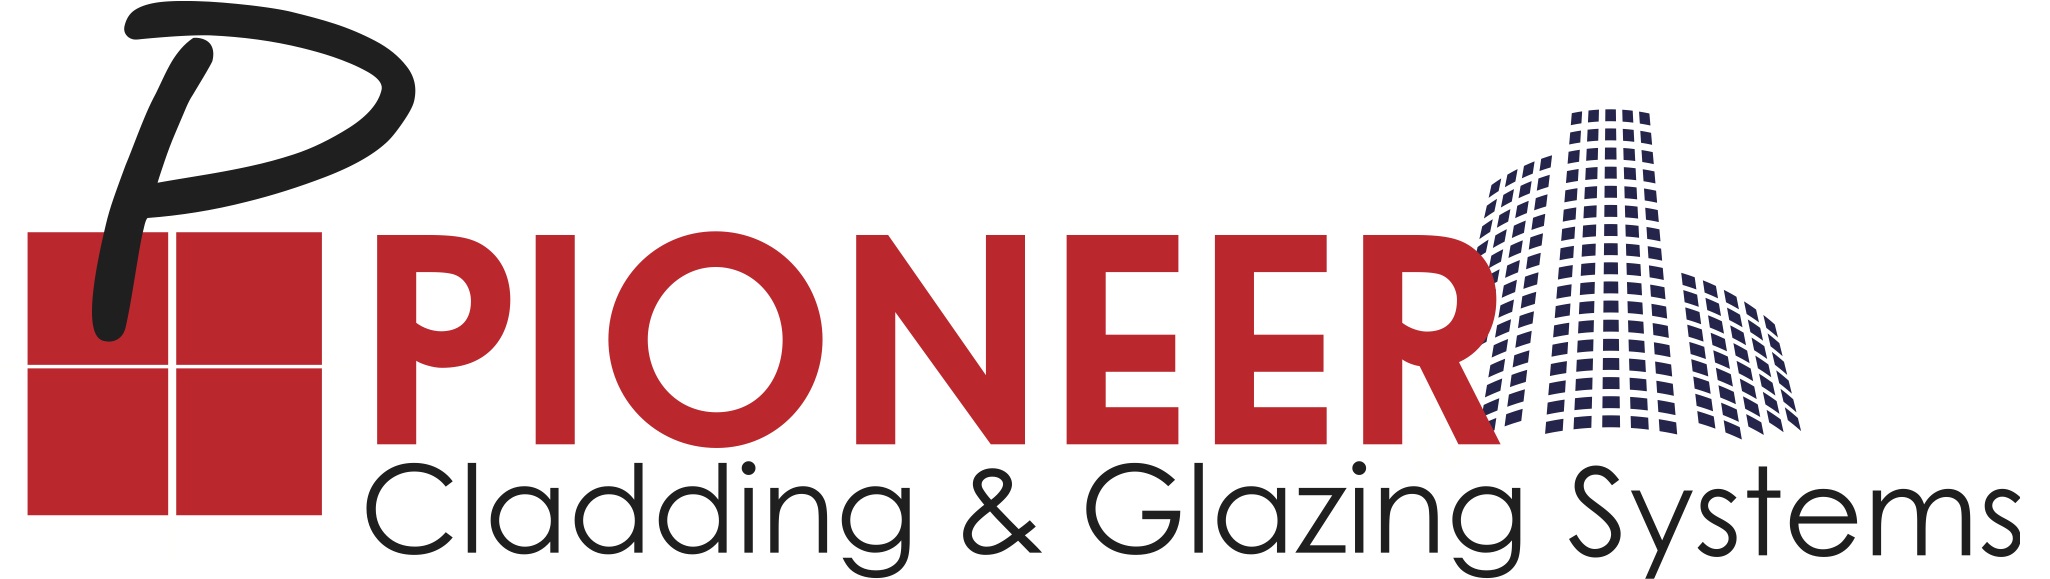 Pioneer Glazing